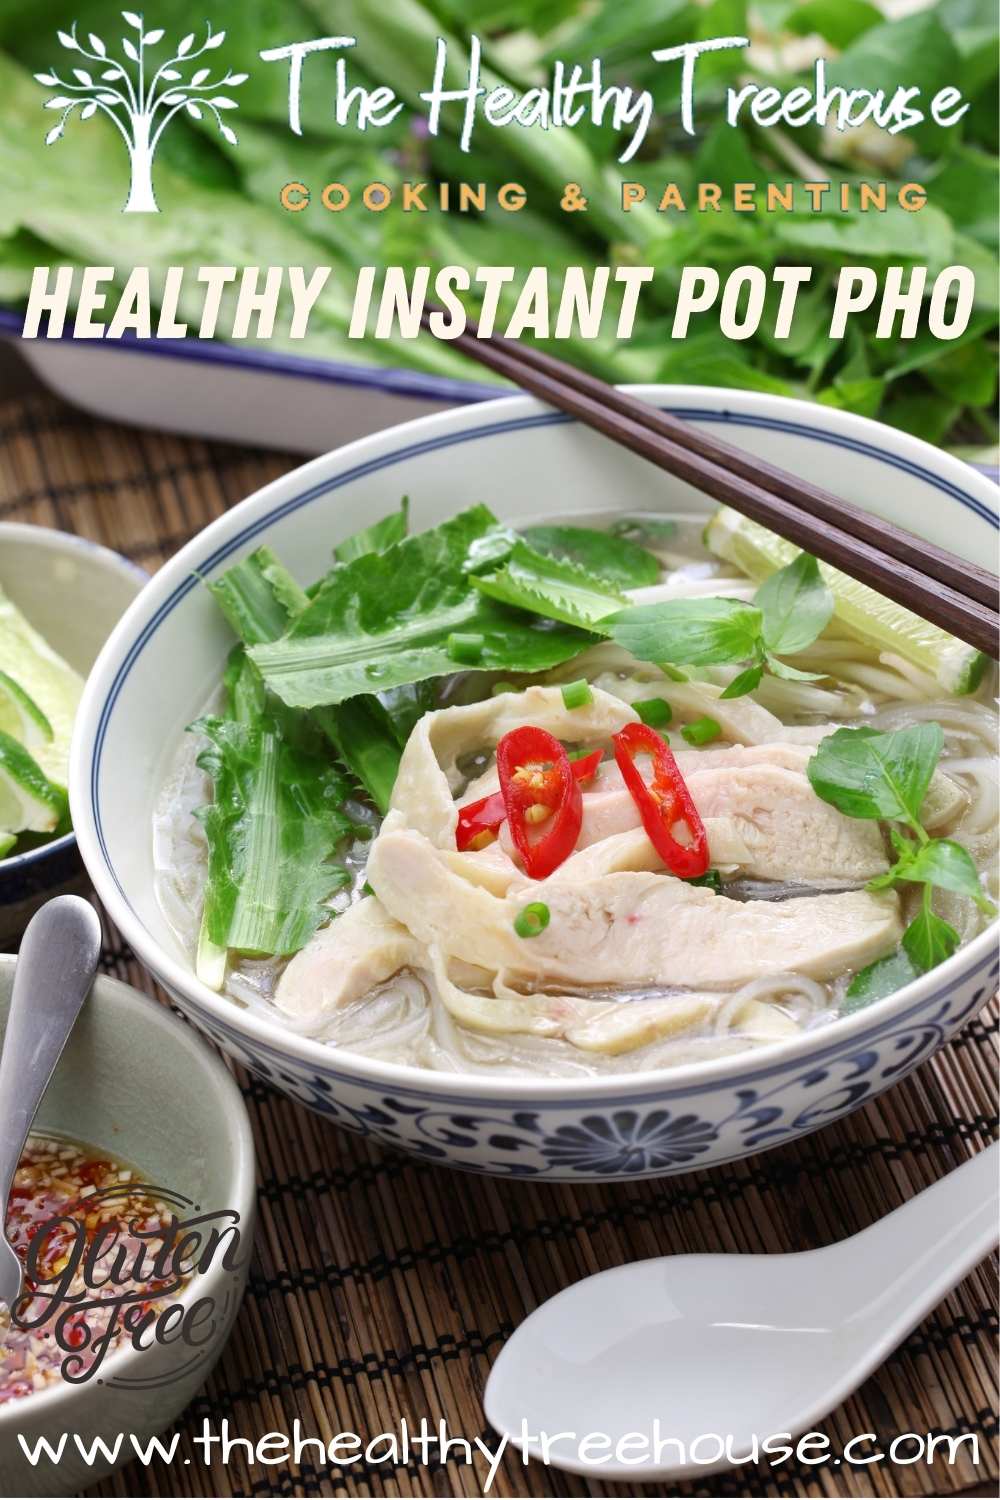 Healthy Instant Pot Pho Recipe - The Healthy Treehouse